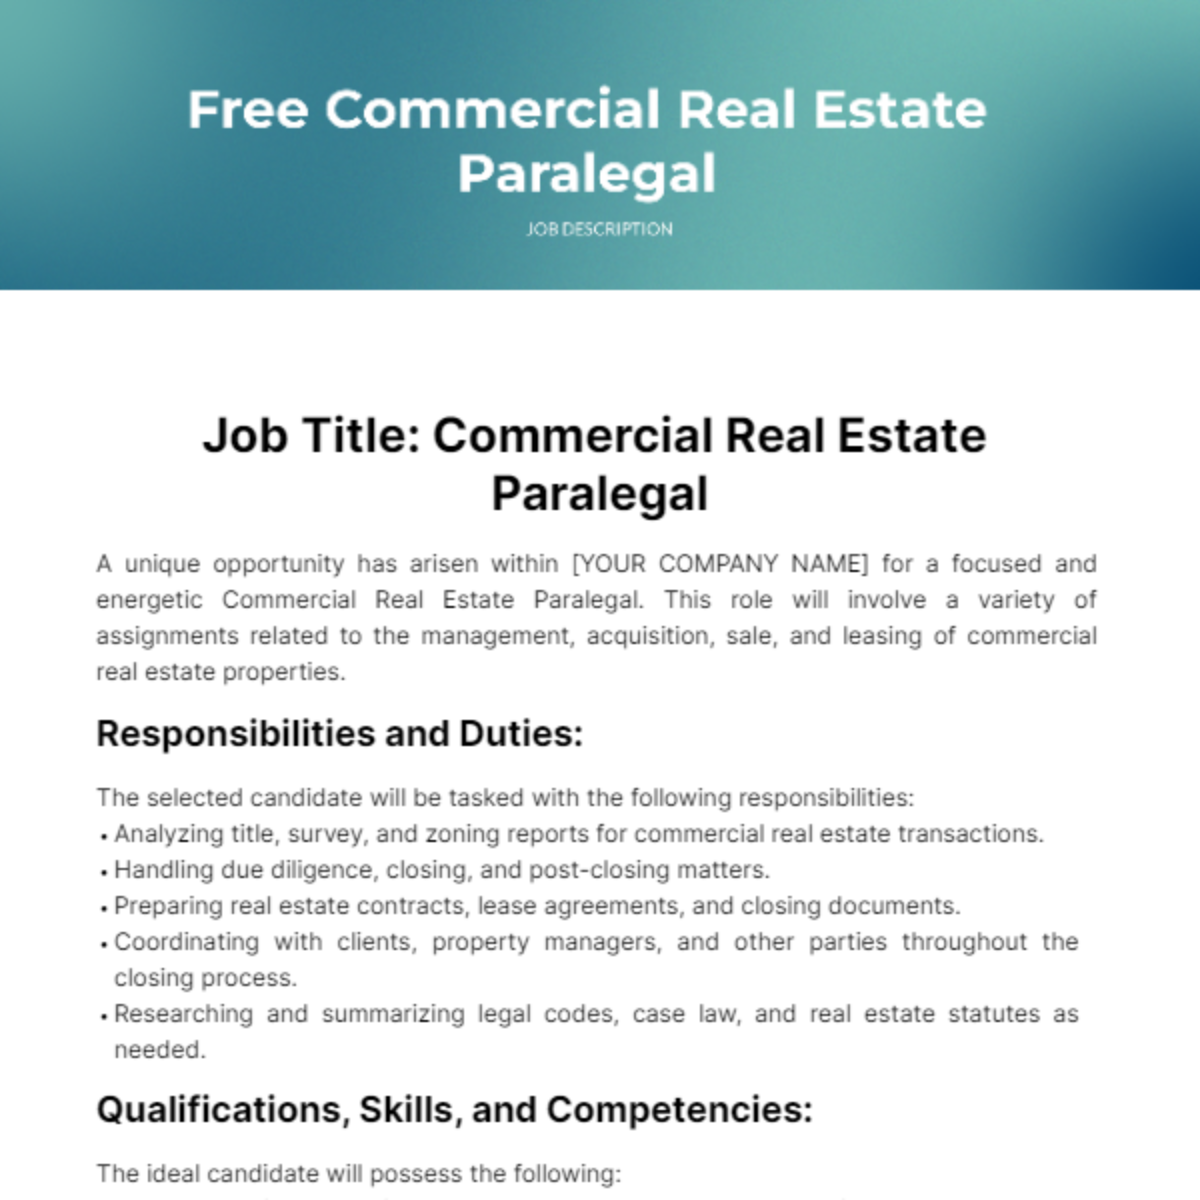 Free Commercial Real Estate Paralegal Job Description Template